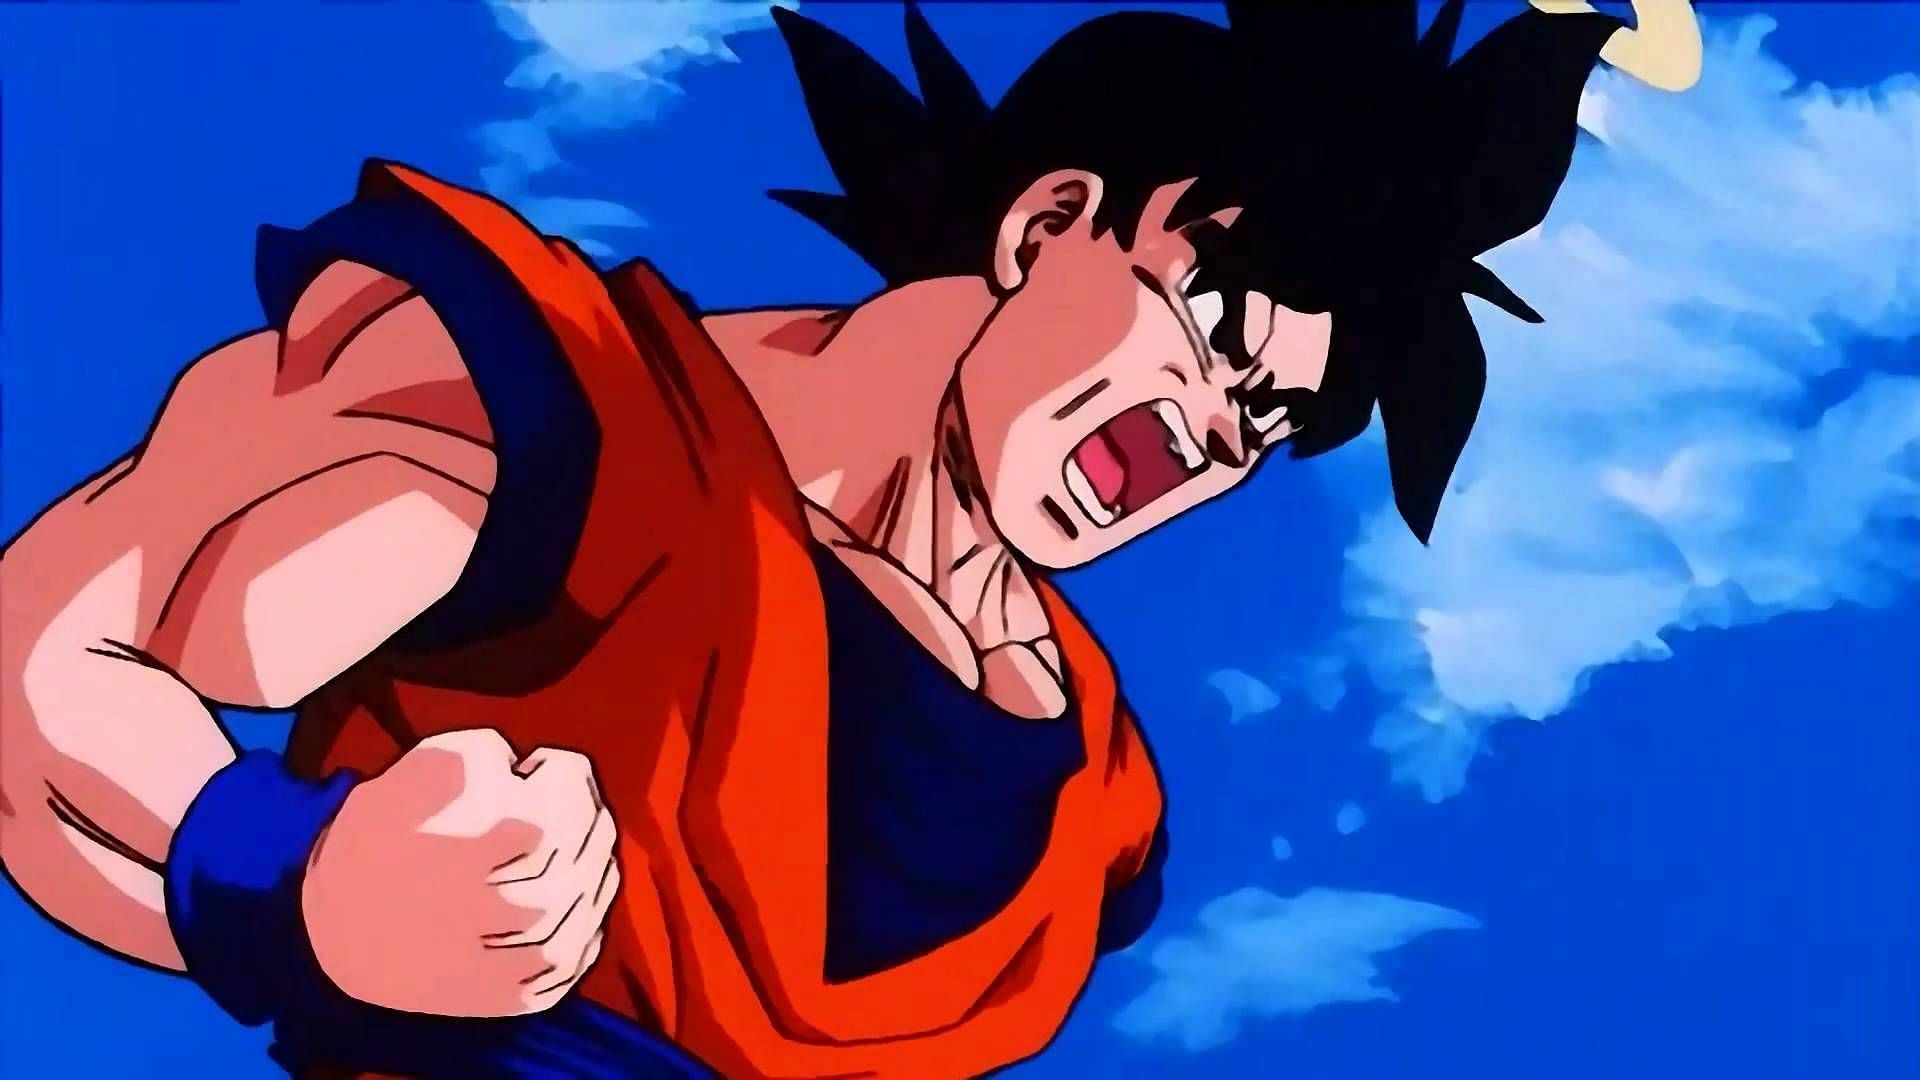 Goku as seen in the Dragon Ball Z anime (Image via Toei Animation)